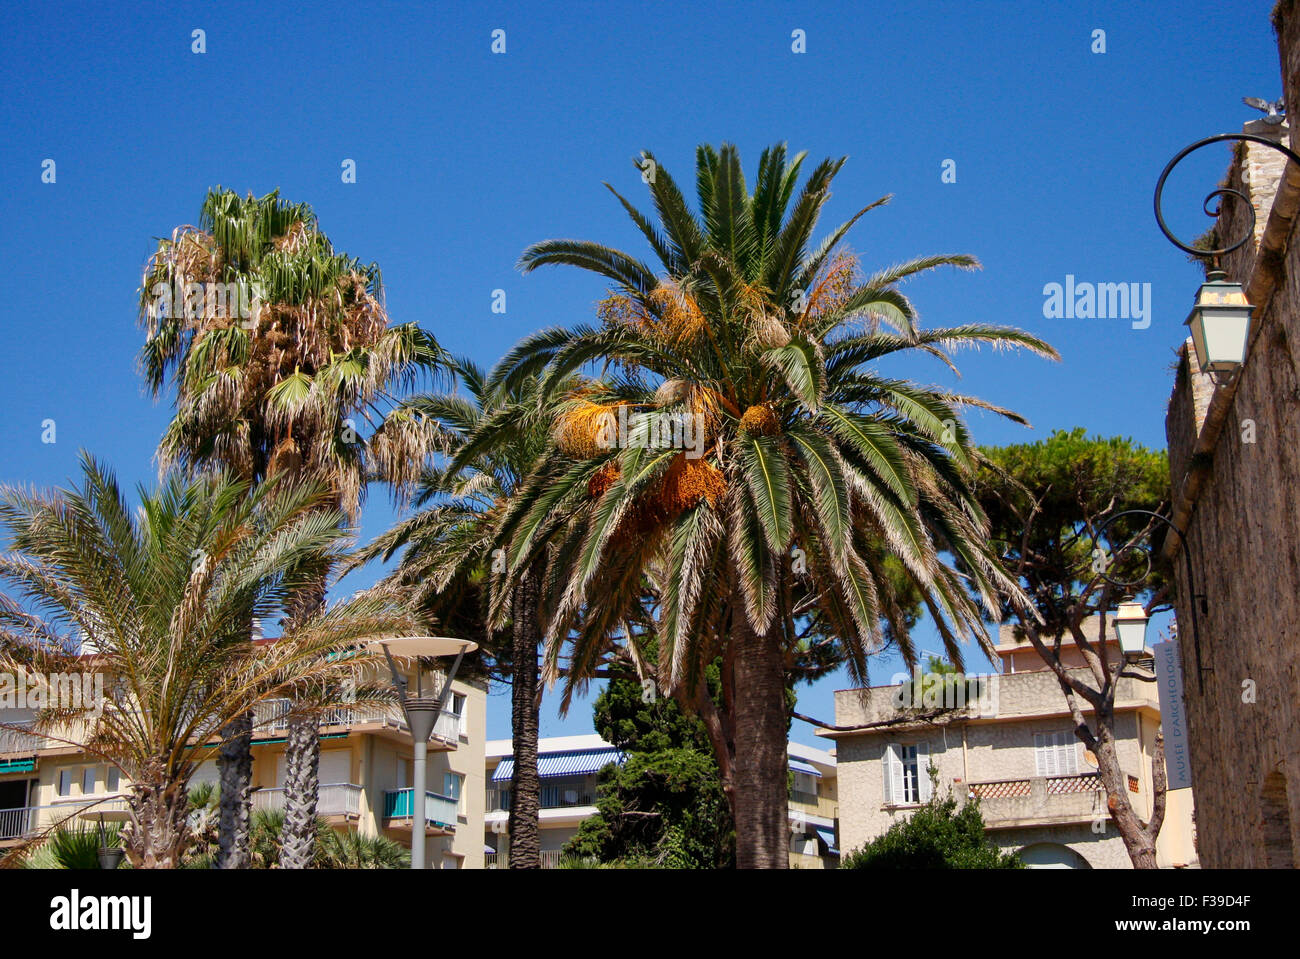 Palmen, Antibes, Cote d'Azur, Frankreich. Stock Photo